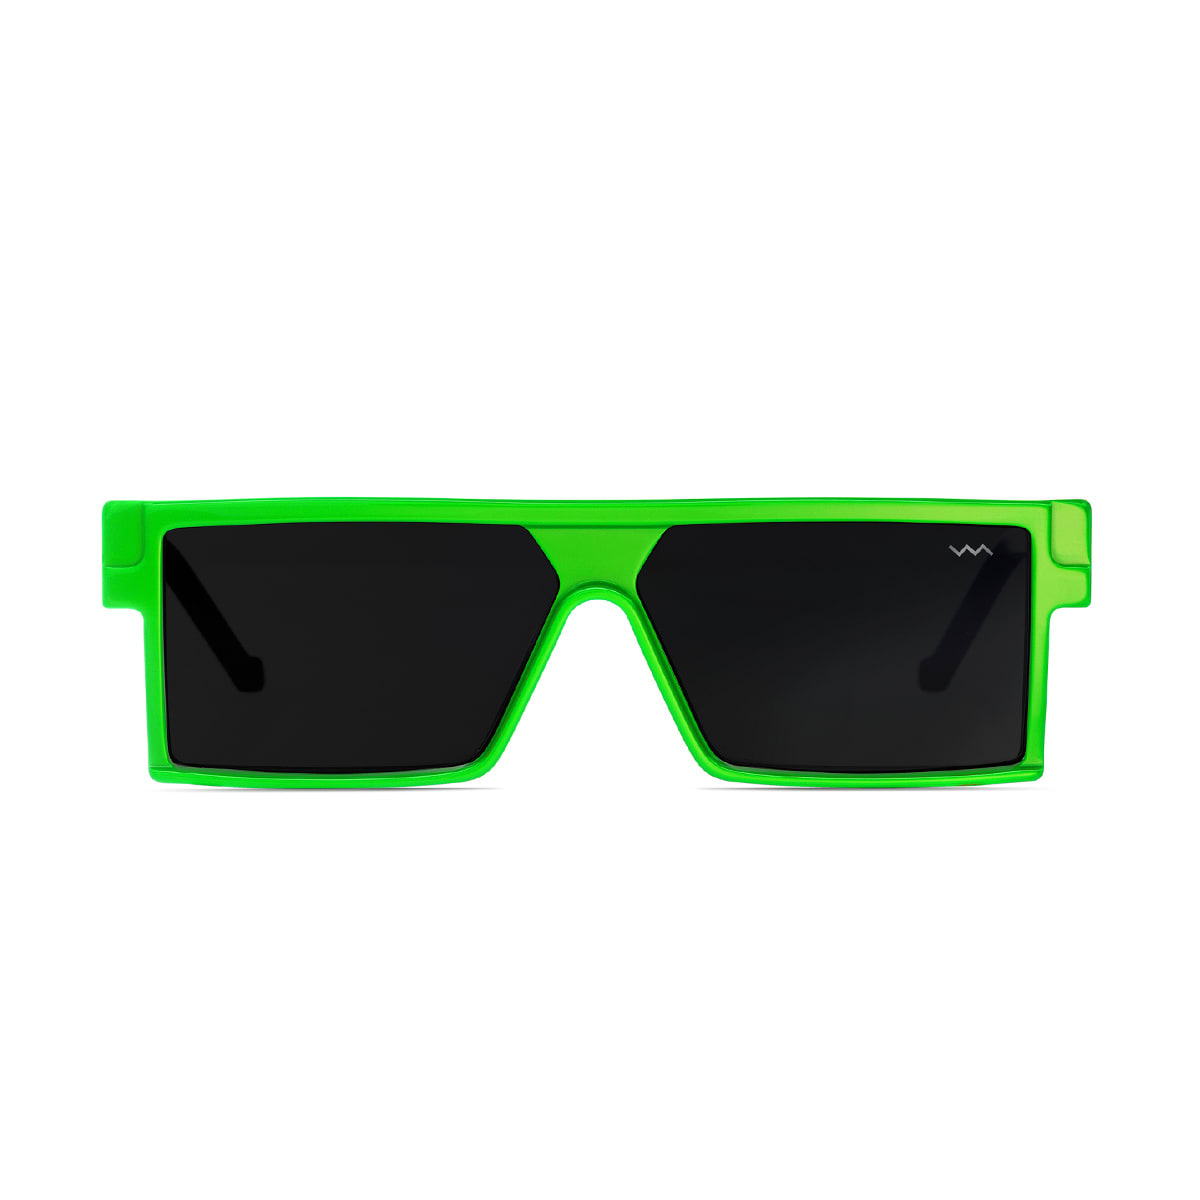 Bl0004 Black Label Acid Green Sunglasses